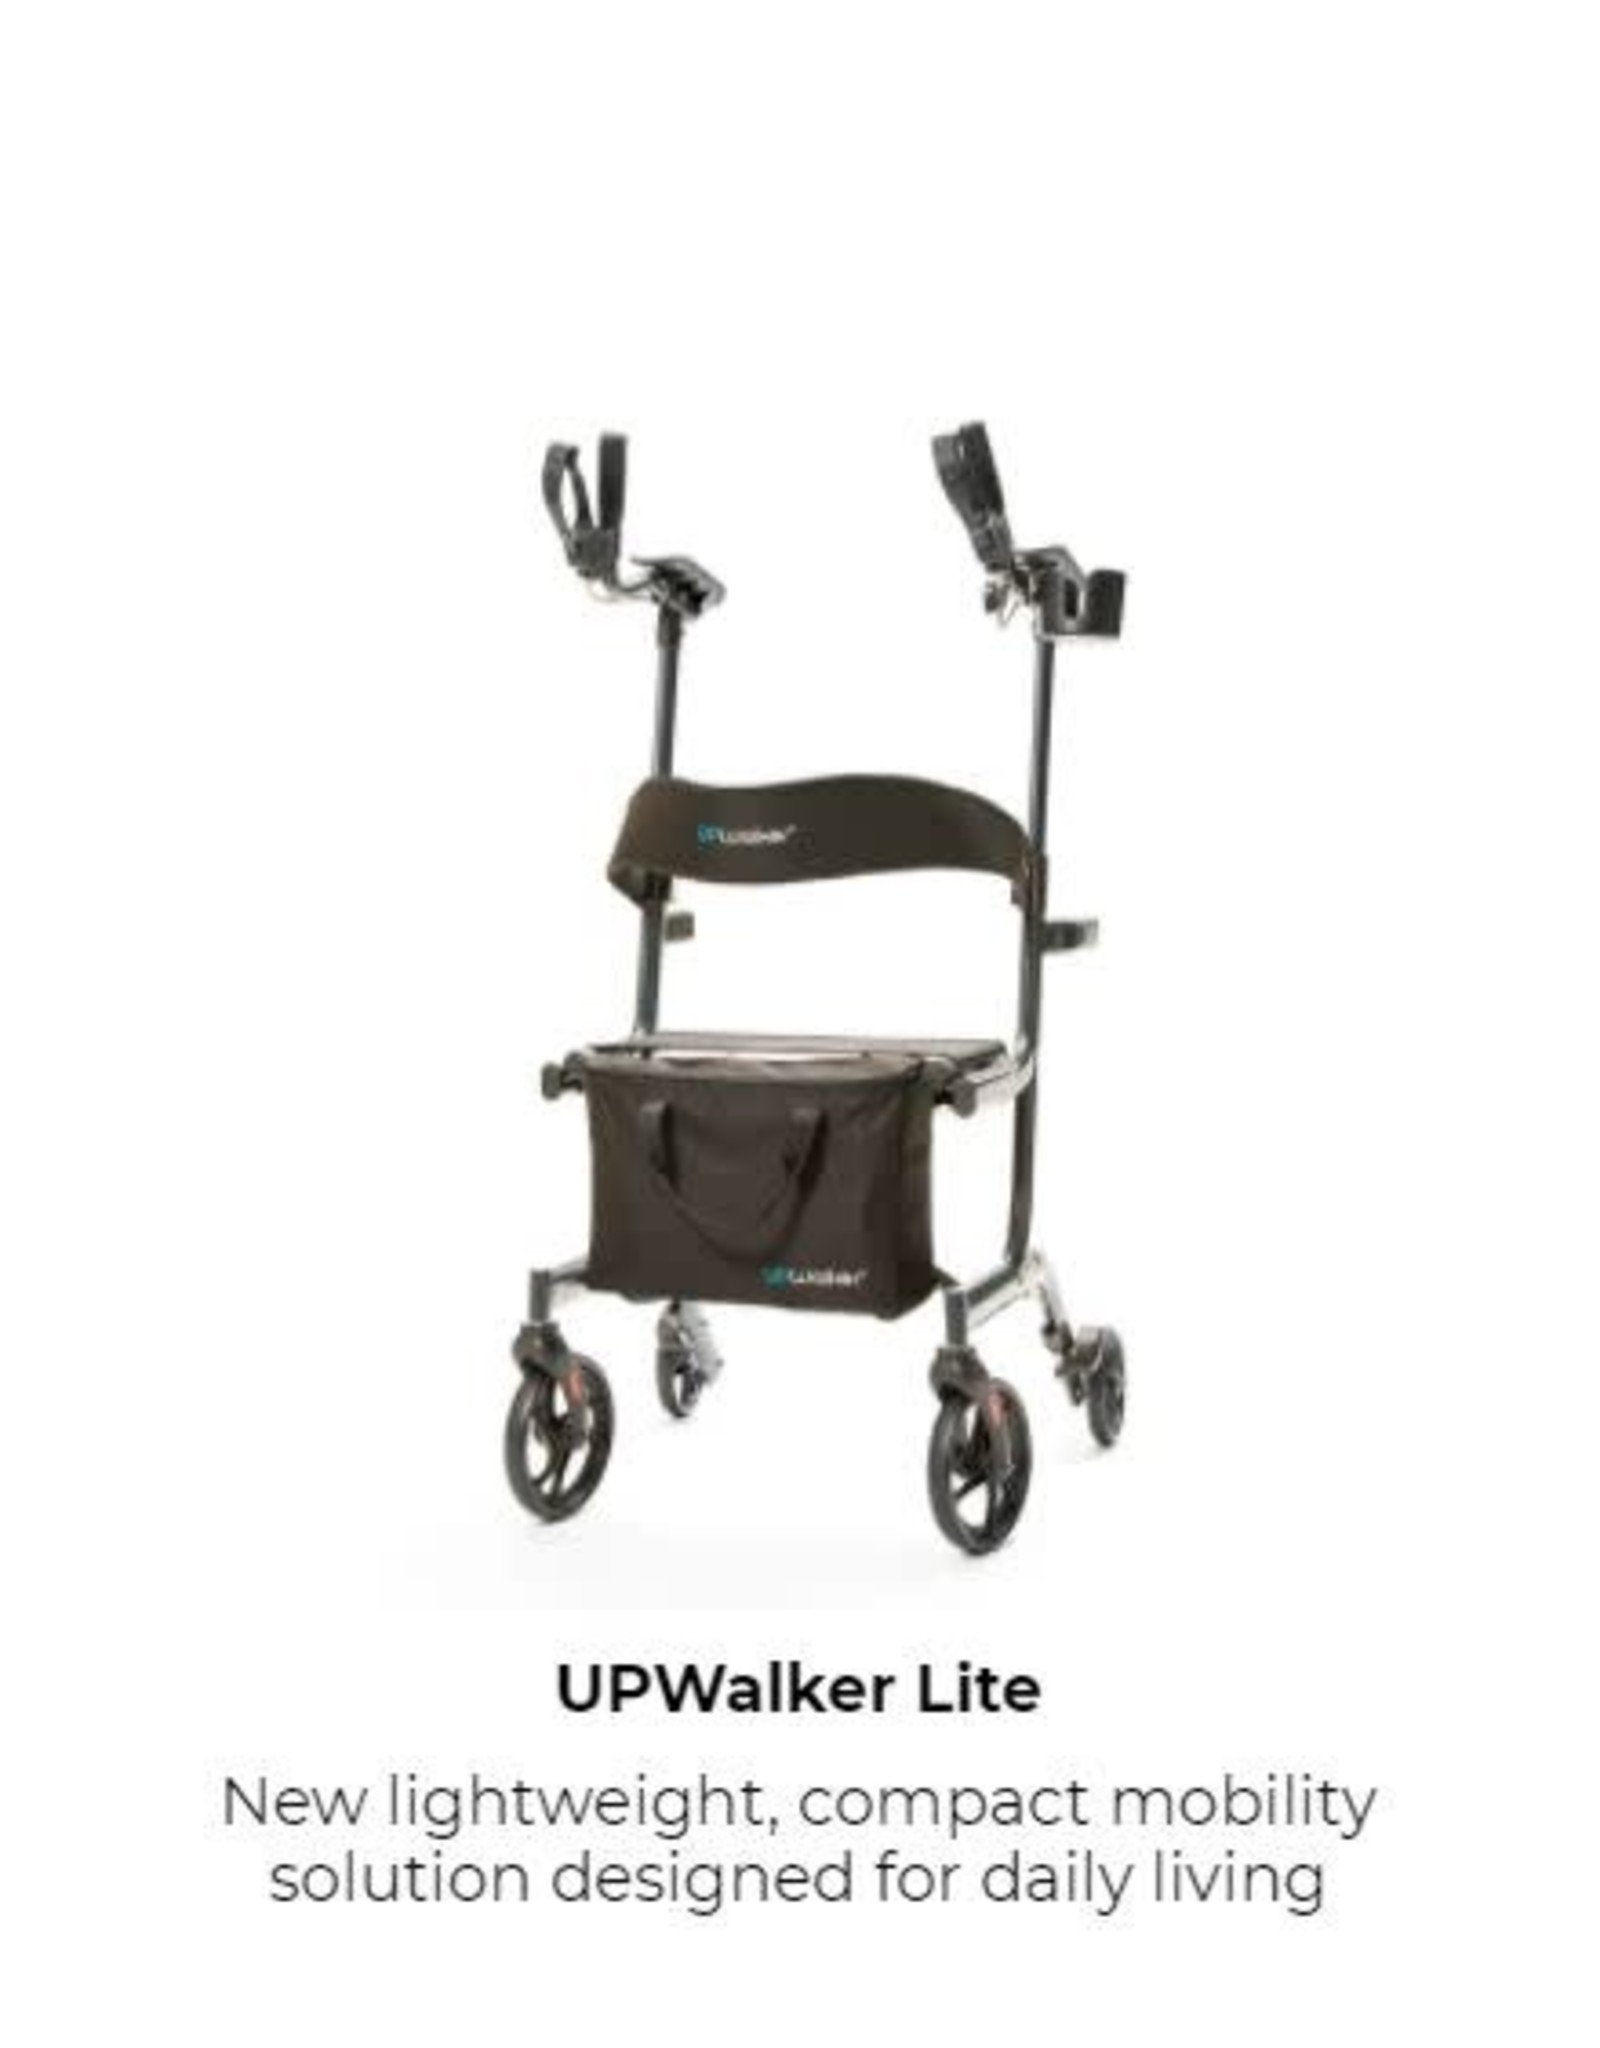 LifeWalker Upwalker i100 Lite